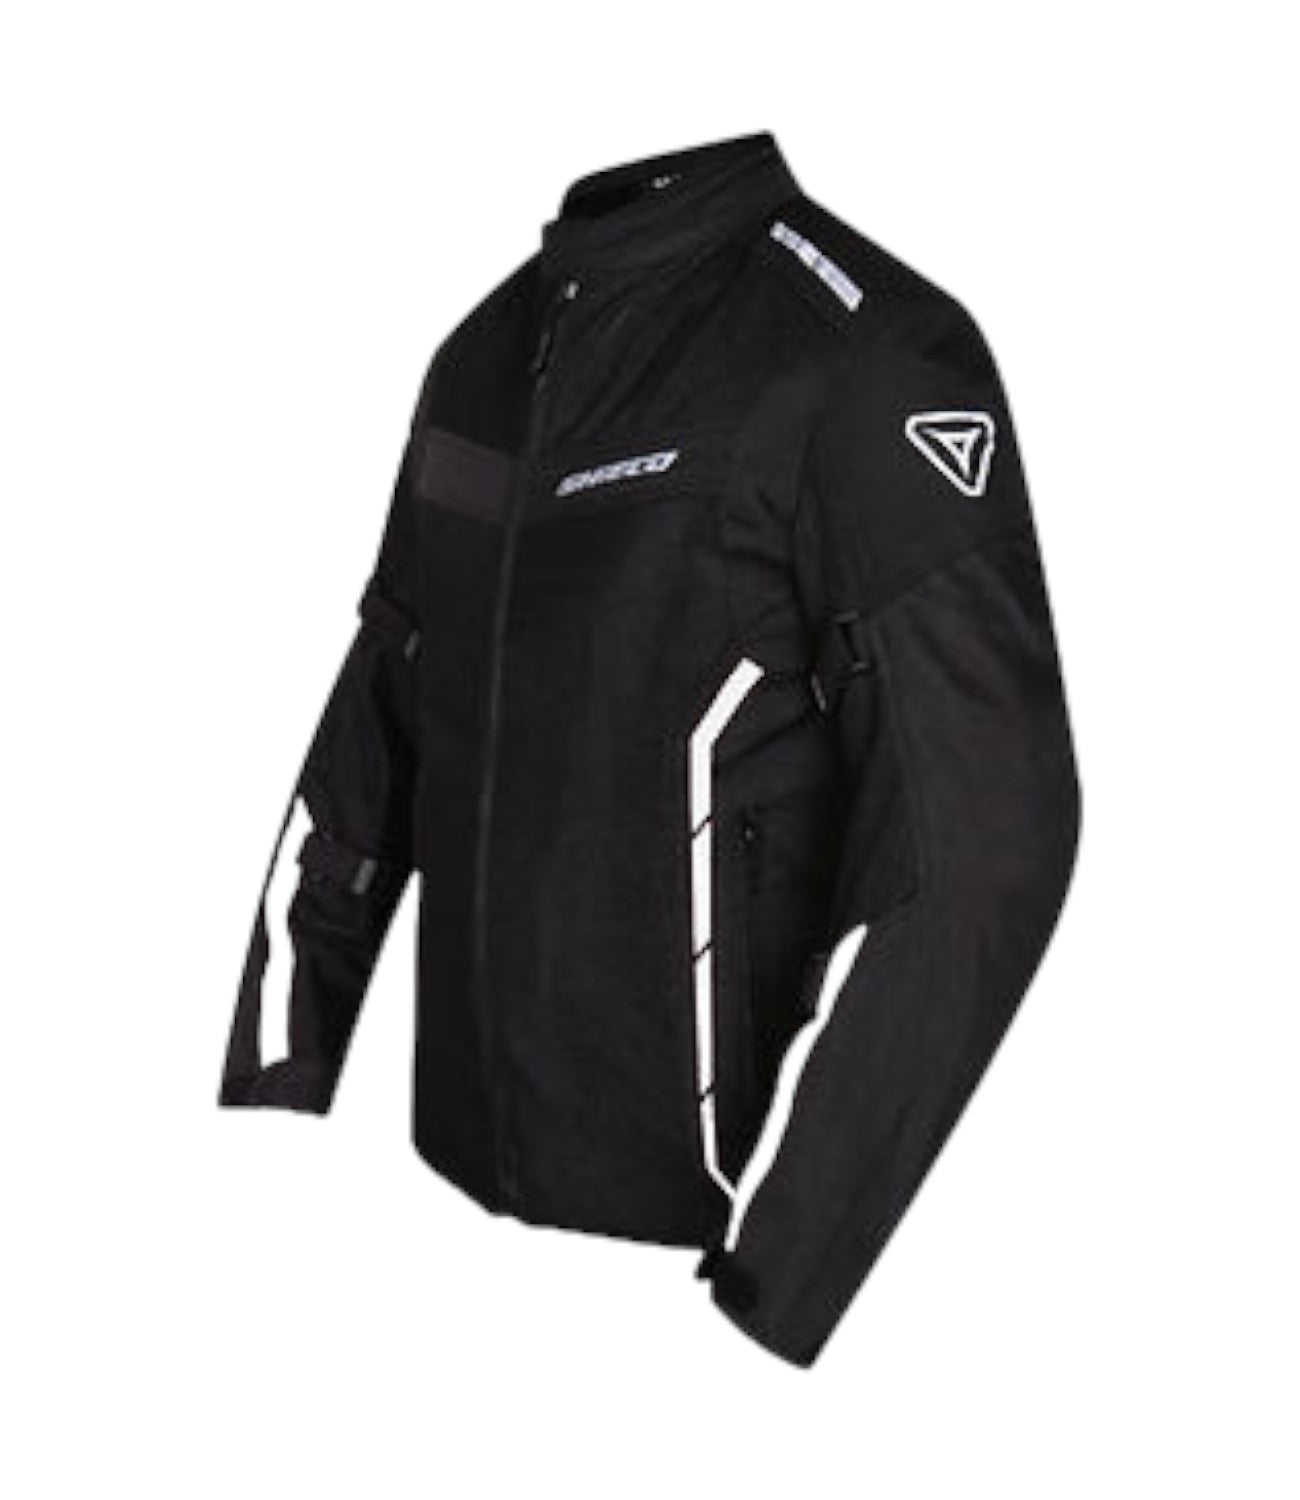 Shield GT Air Mesh Level 2 Jacket (Black White)